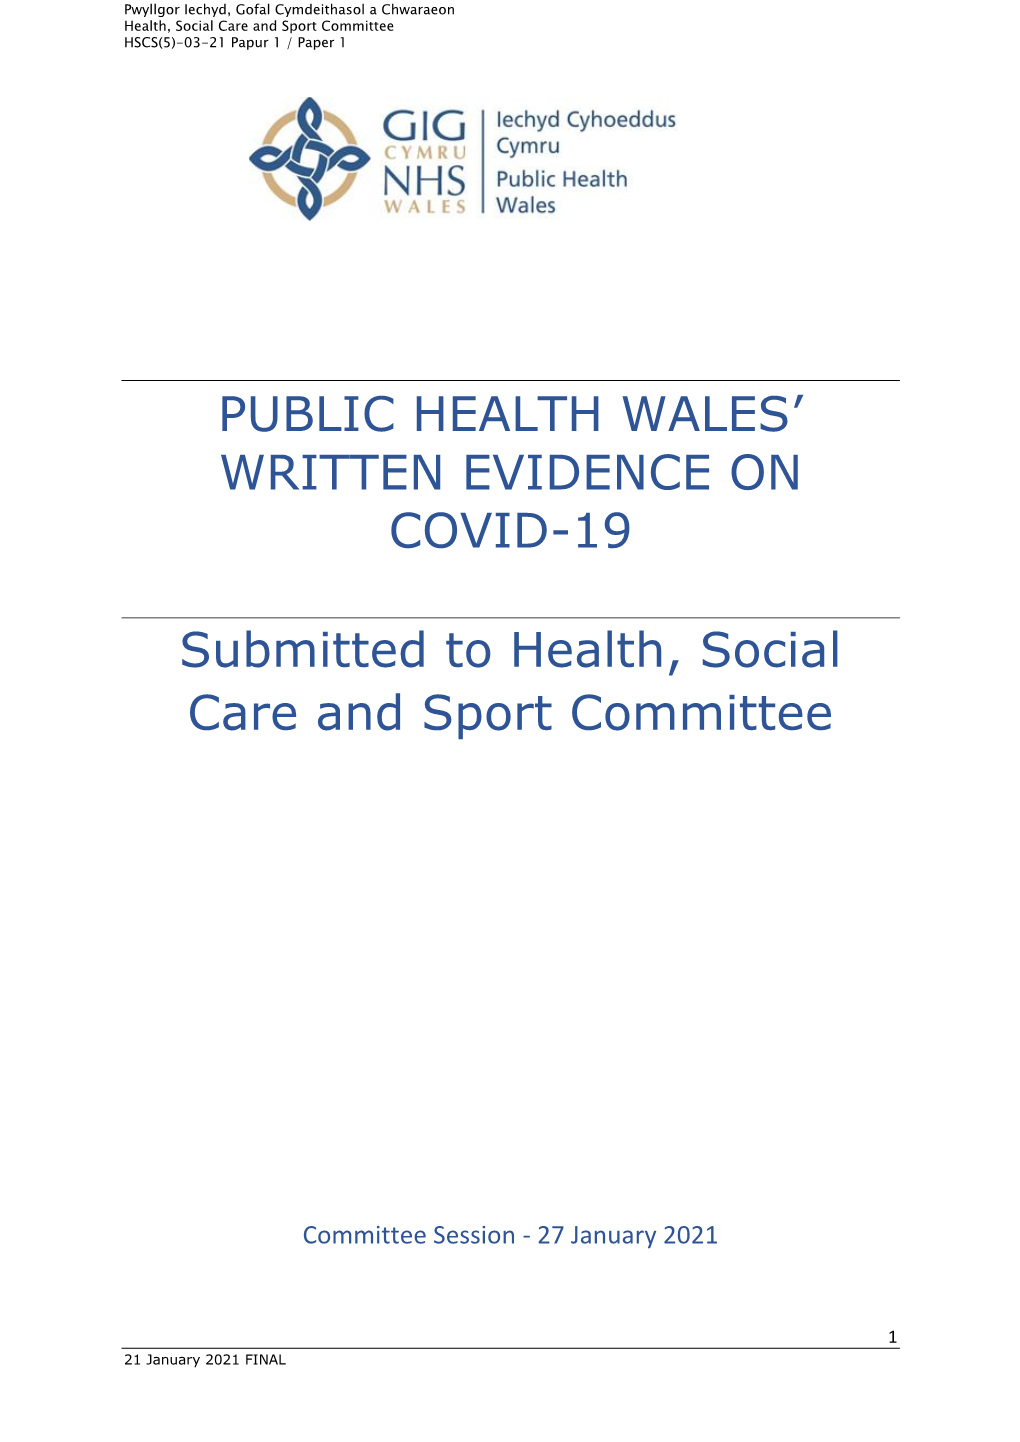 Public Health Wales' Written Evidence on Covid-19